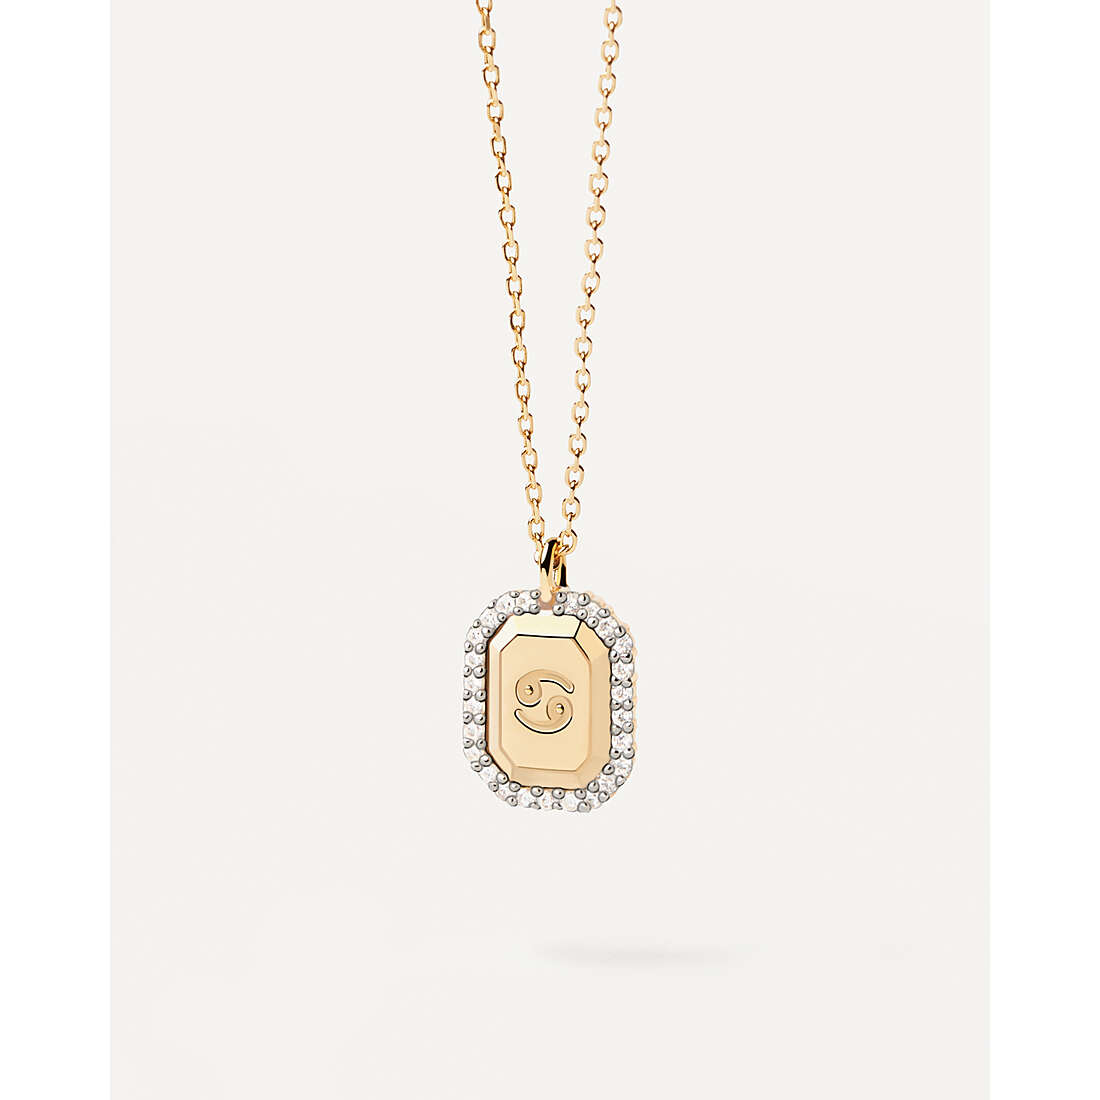 necklace woman zodiac sign Cancer PDPaola jewel CO01-571-U